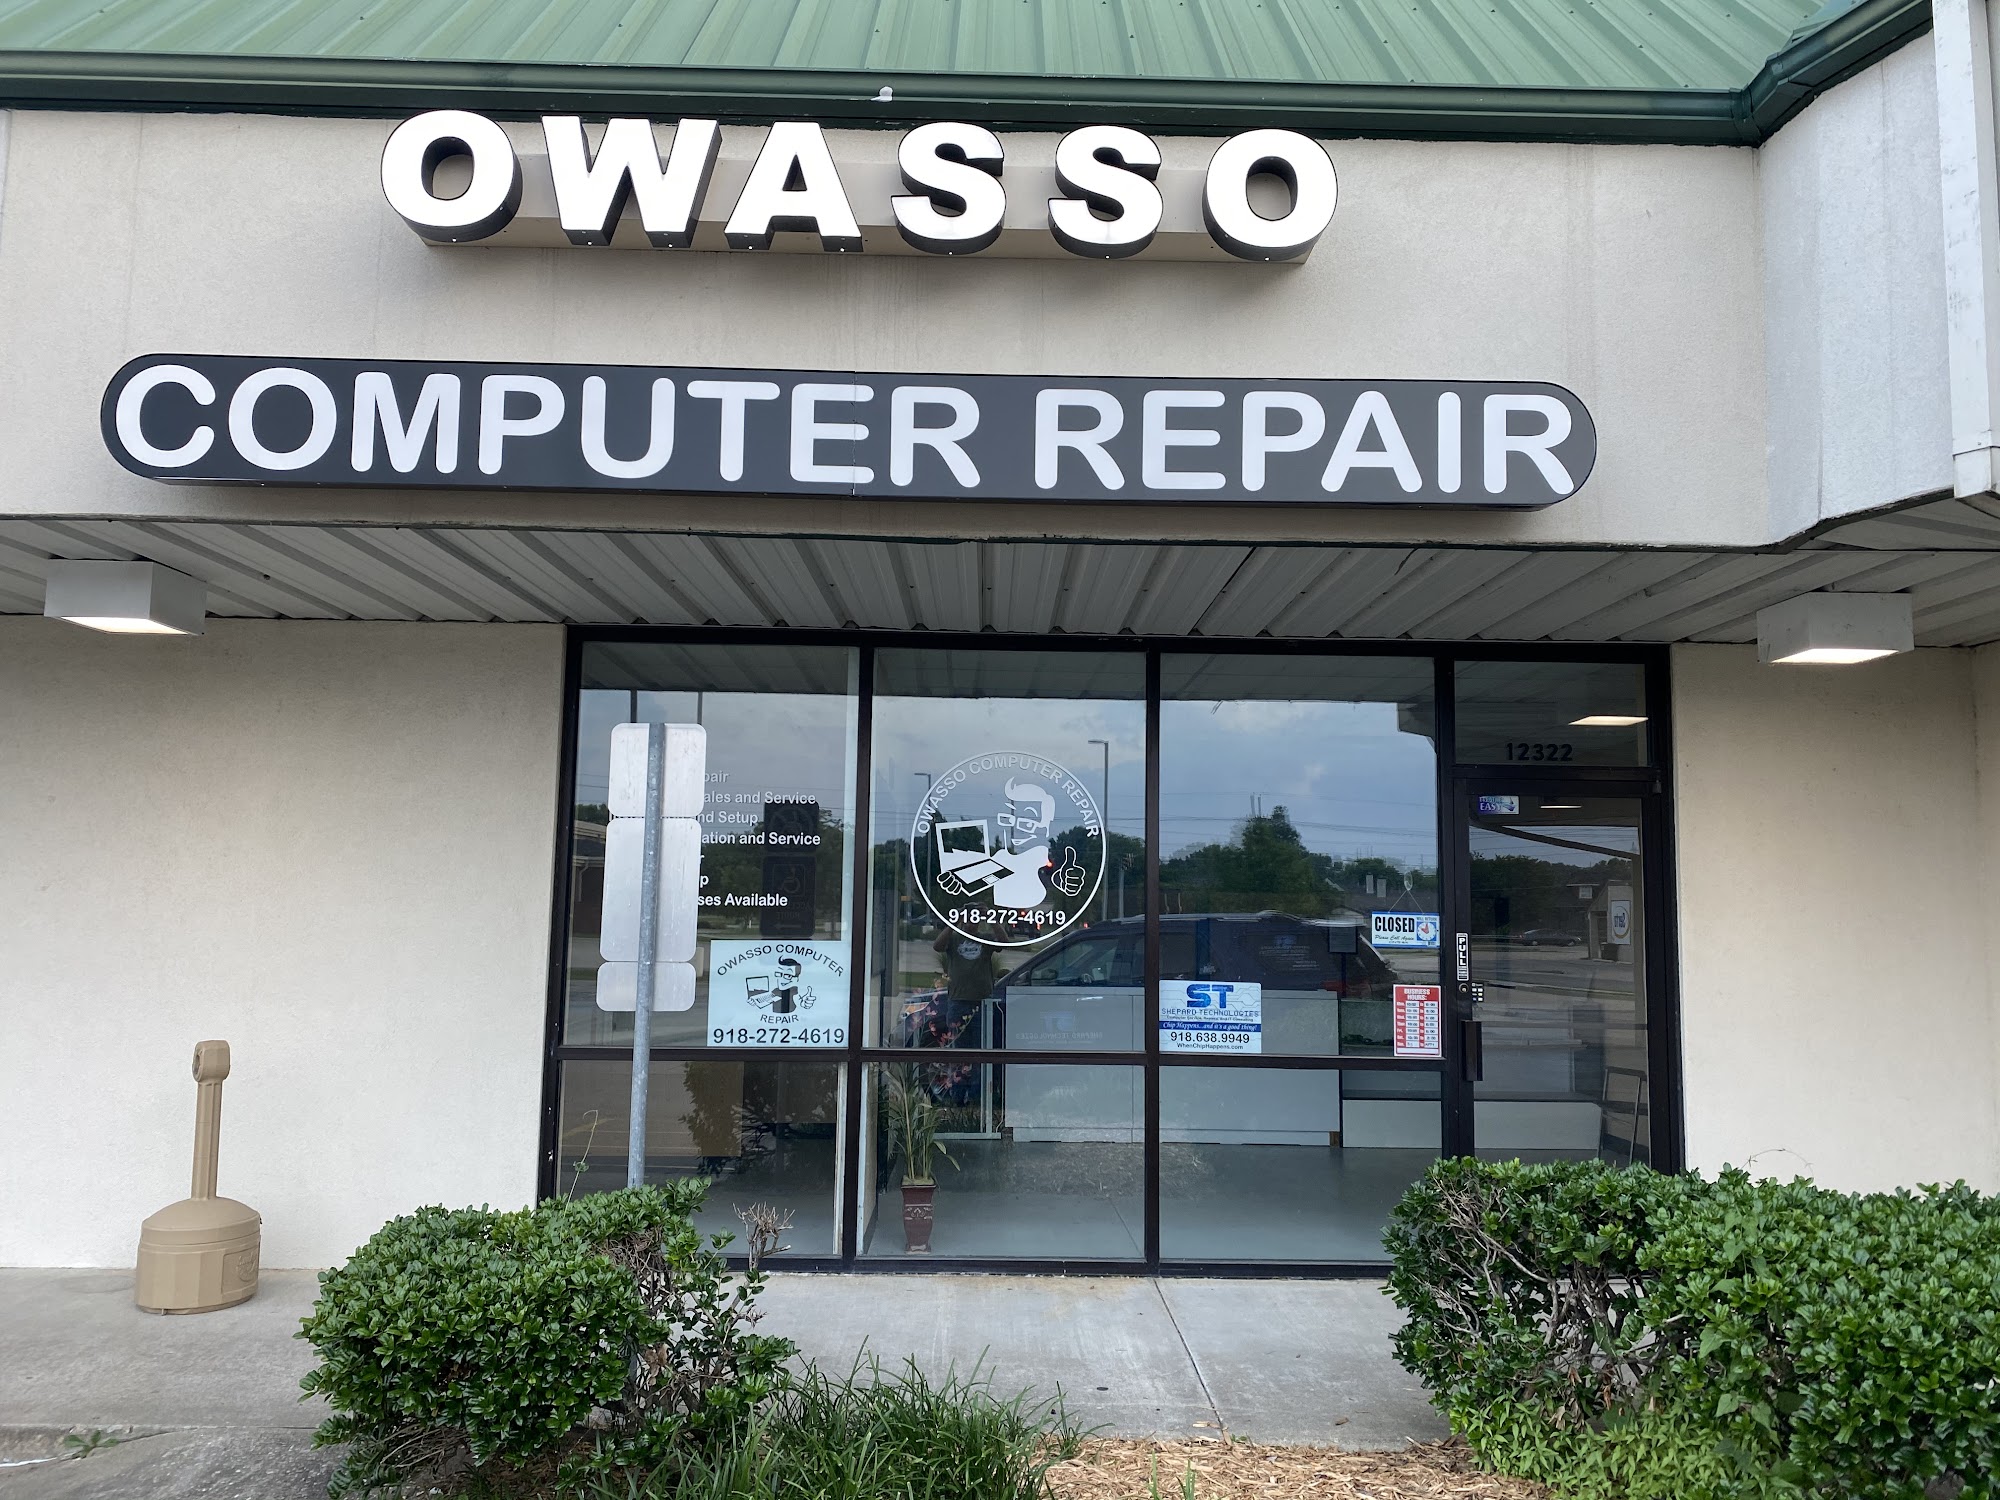 Owasso Computer Repair